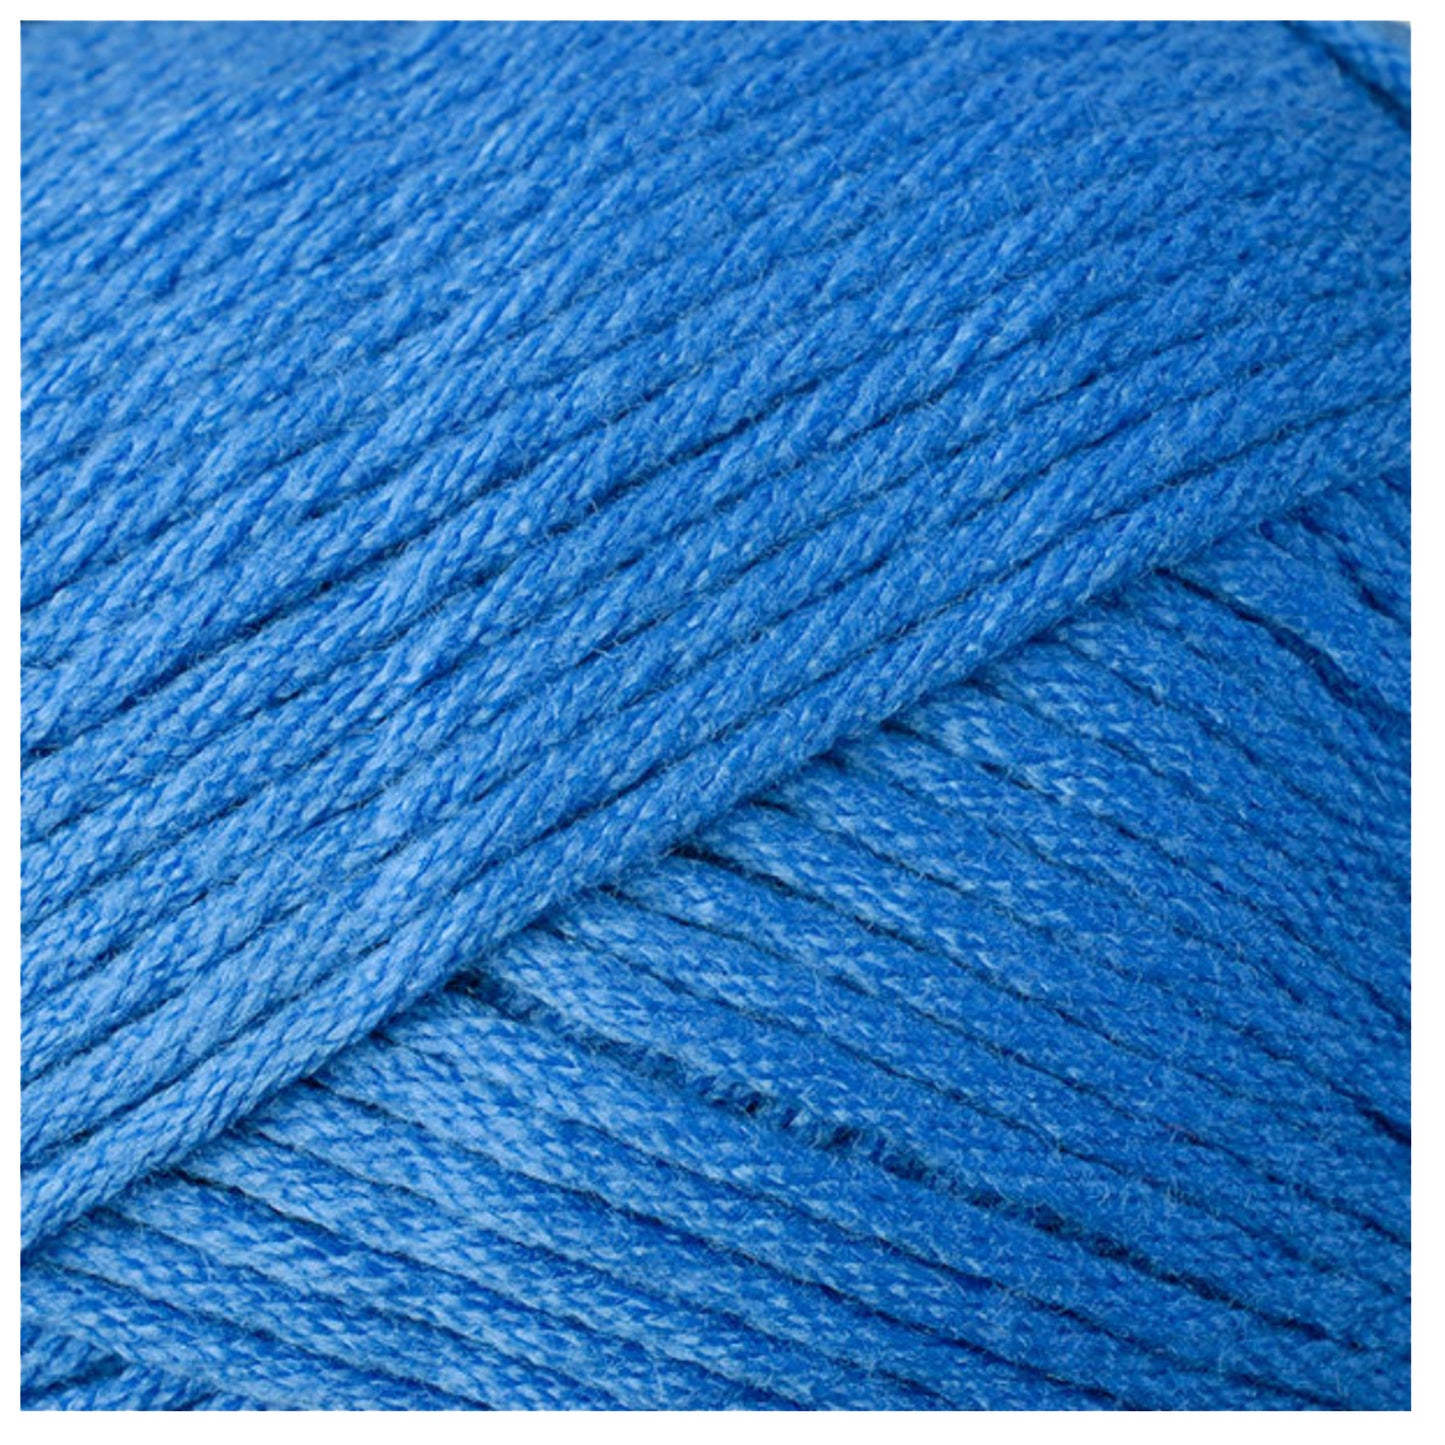 Colorful Crochet Skirt/Cowl - L/1X/2X/3X/4X - All Blues Crochet Kit Alternative View #3